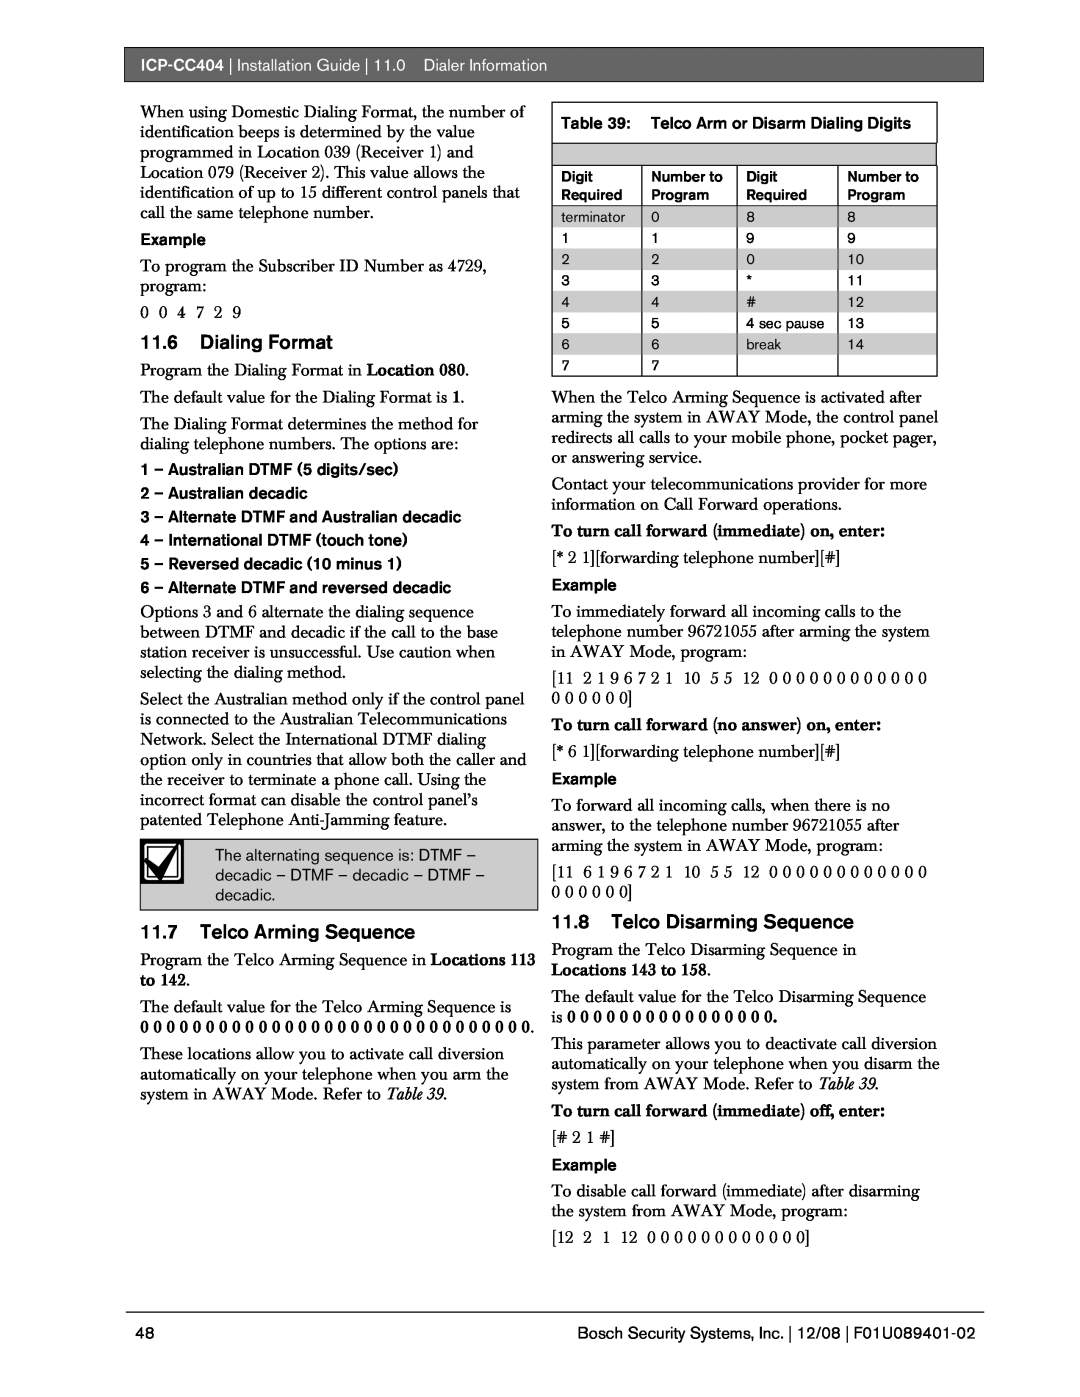 Bosch Appliances ICP-CC404 manual 11.6Dialing Format, 11.7Telco Arming Sequence, 11.8Telco Disarming Sequence 